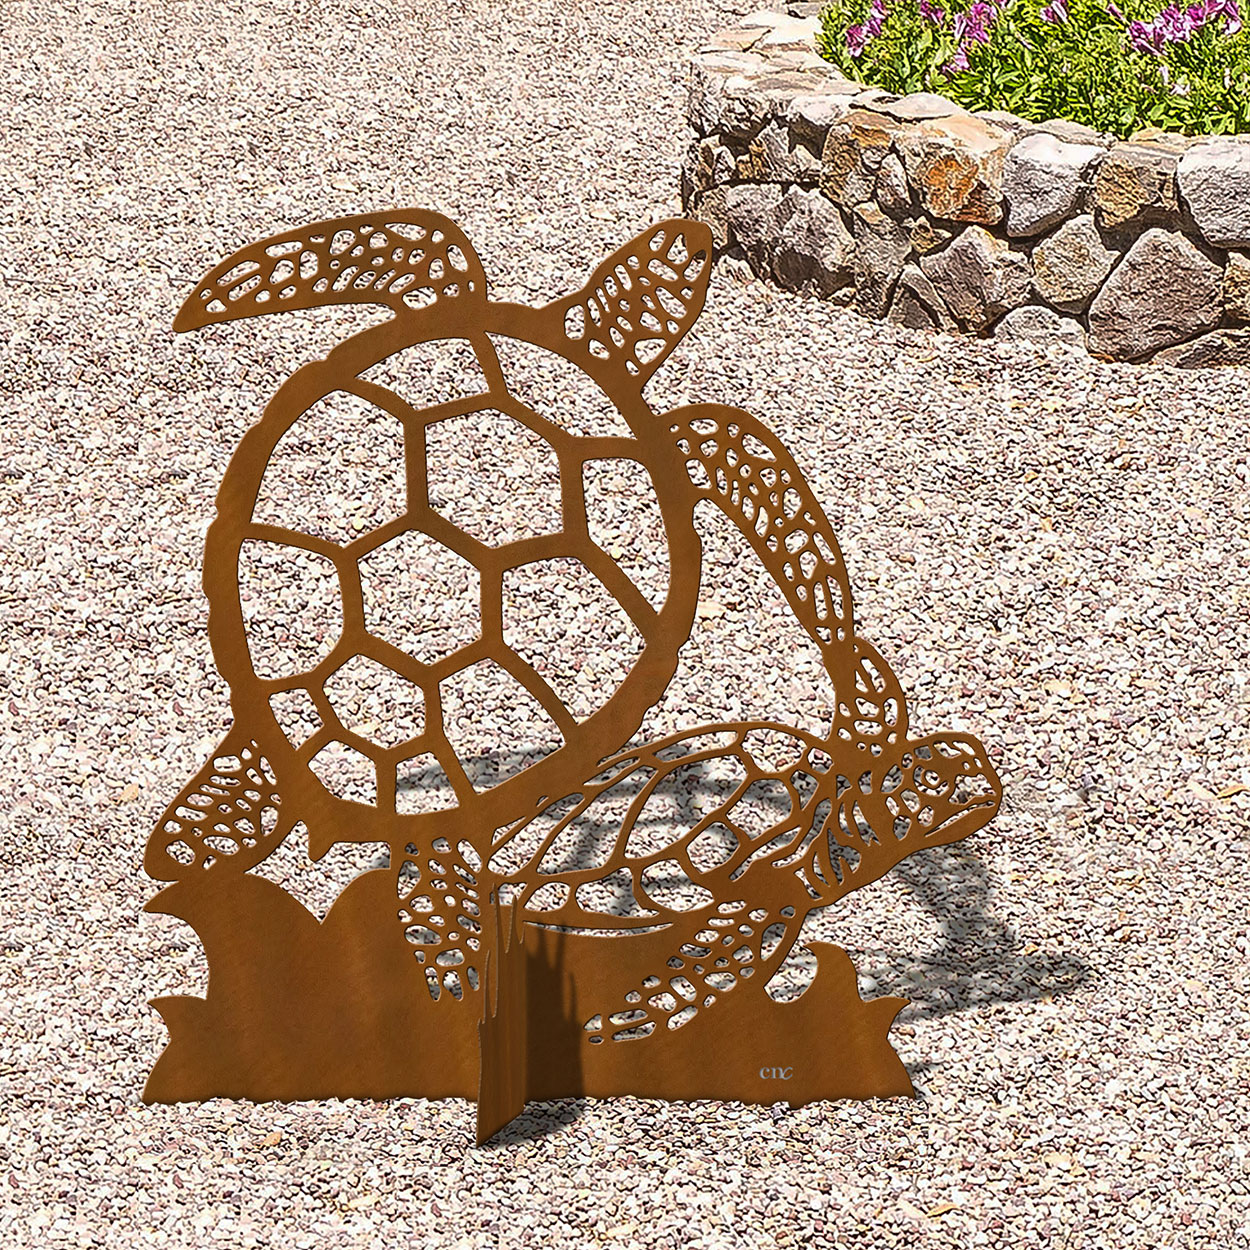 603256 - 36in H Sea Turtles Large Metal Lawn Ornament in Rust Patina